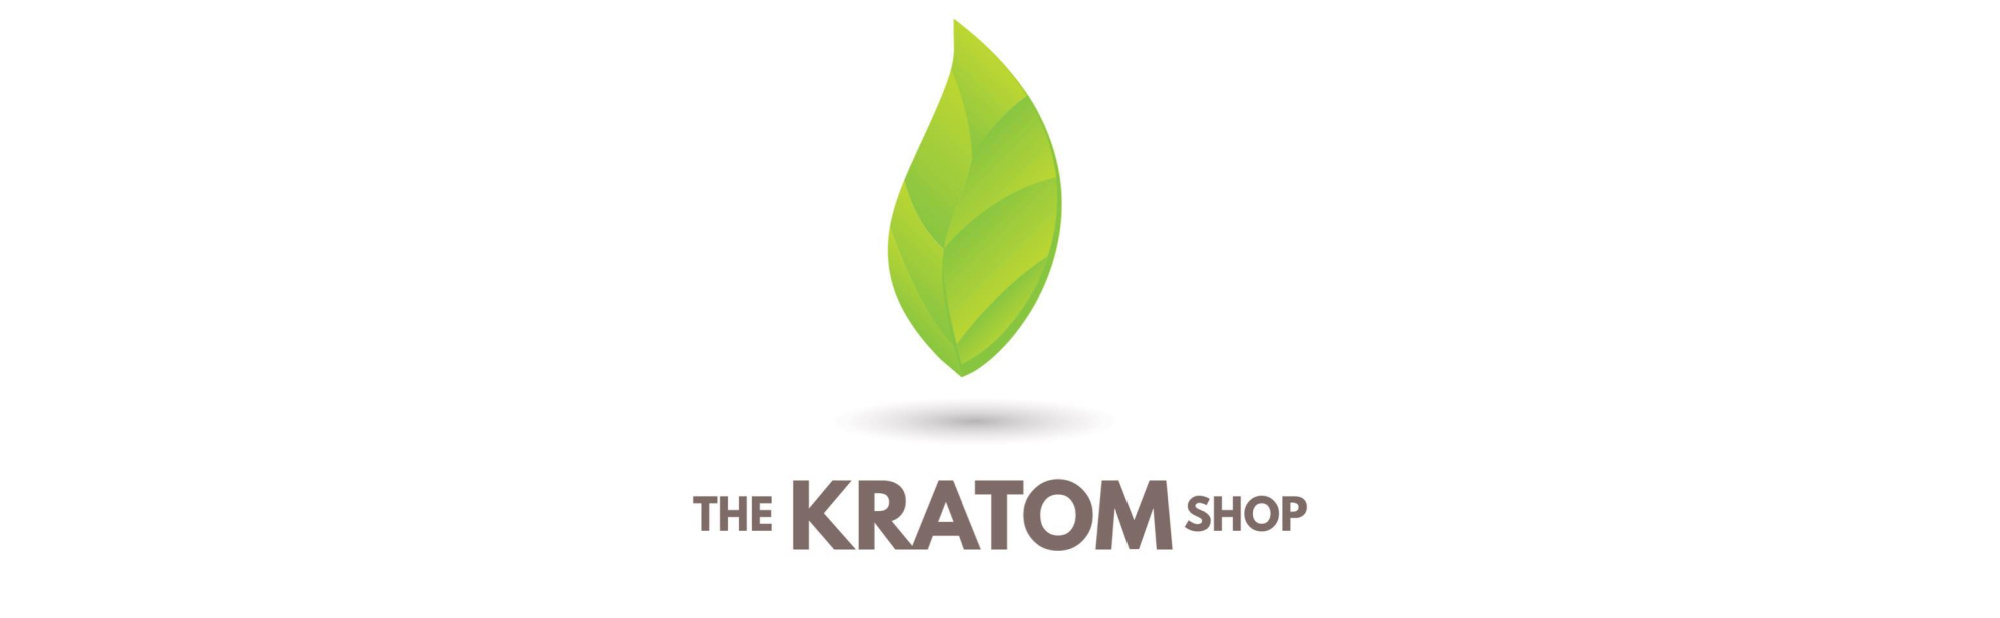 image of the kratom shop in rochestar ny